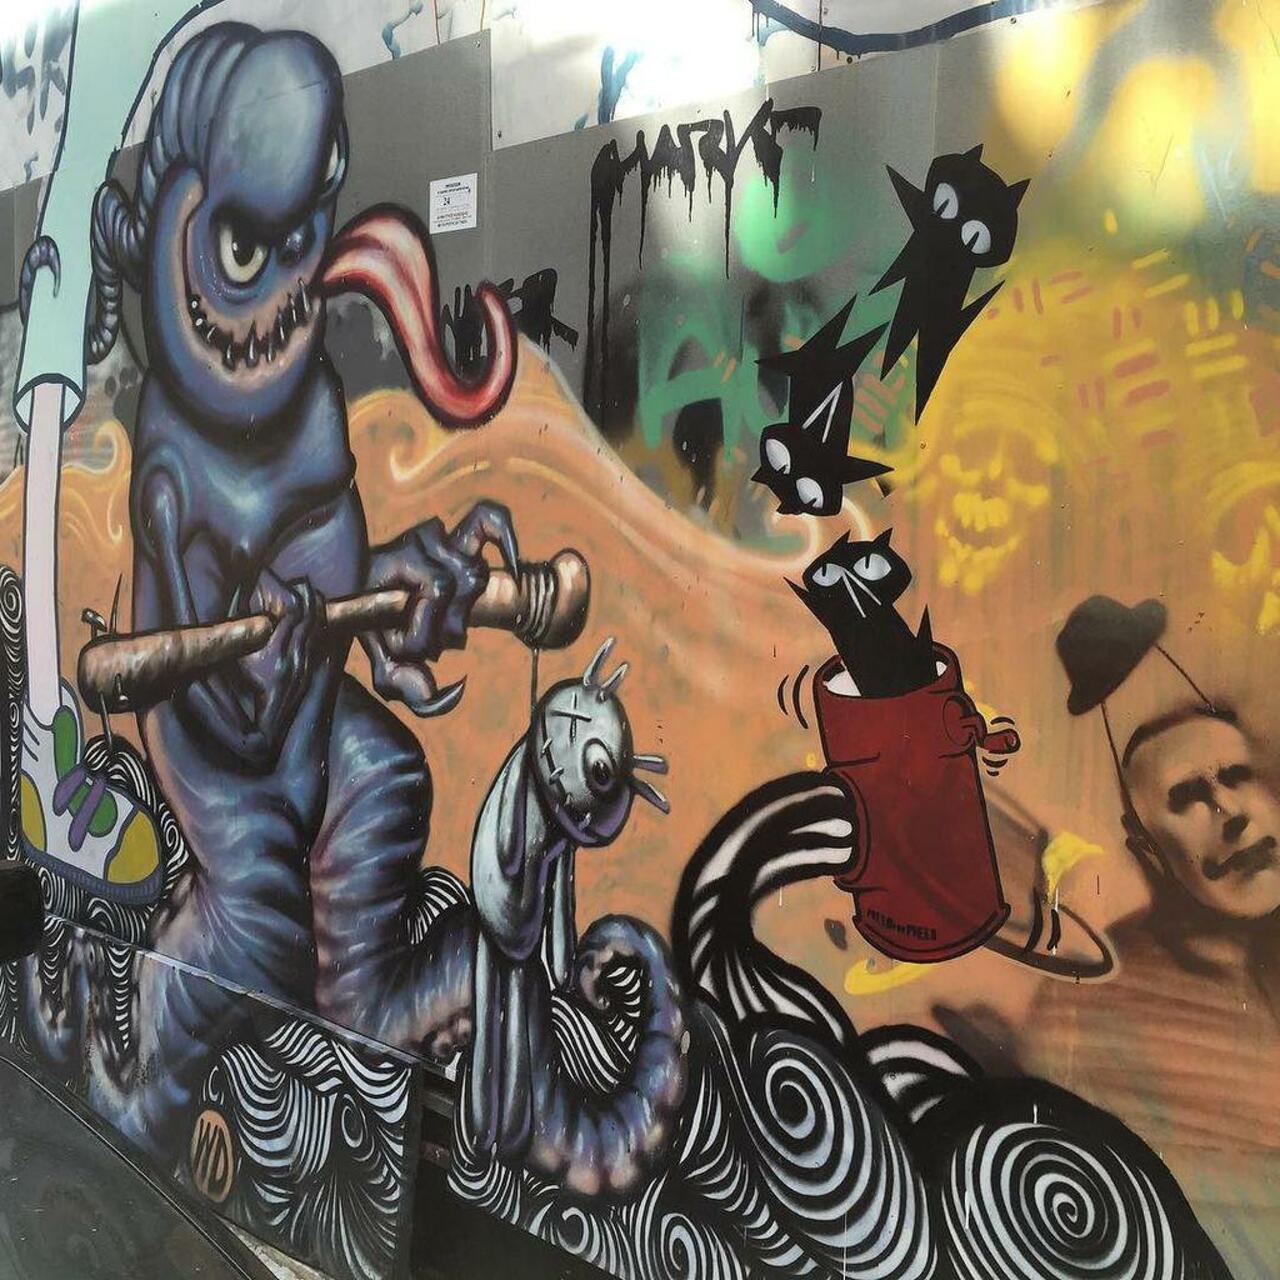 Graffiti Art
Central Athens, Greece
#graff #graffiti #graffitiathens #outsider #outsiderart #street #streetart #str… http://t.co/6nAMb2E8WQ